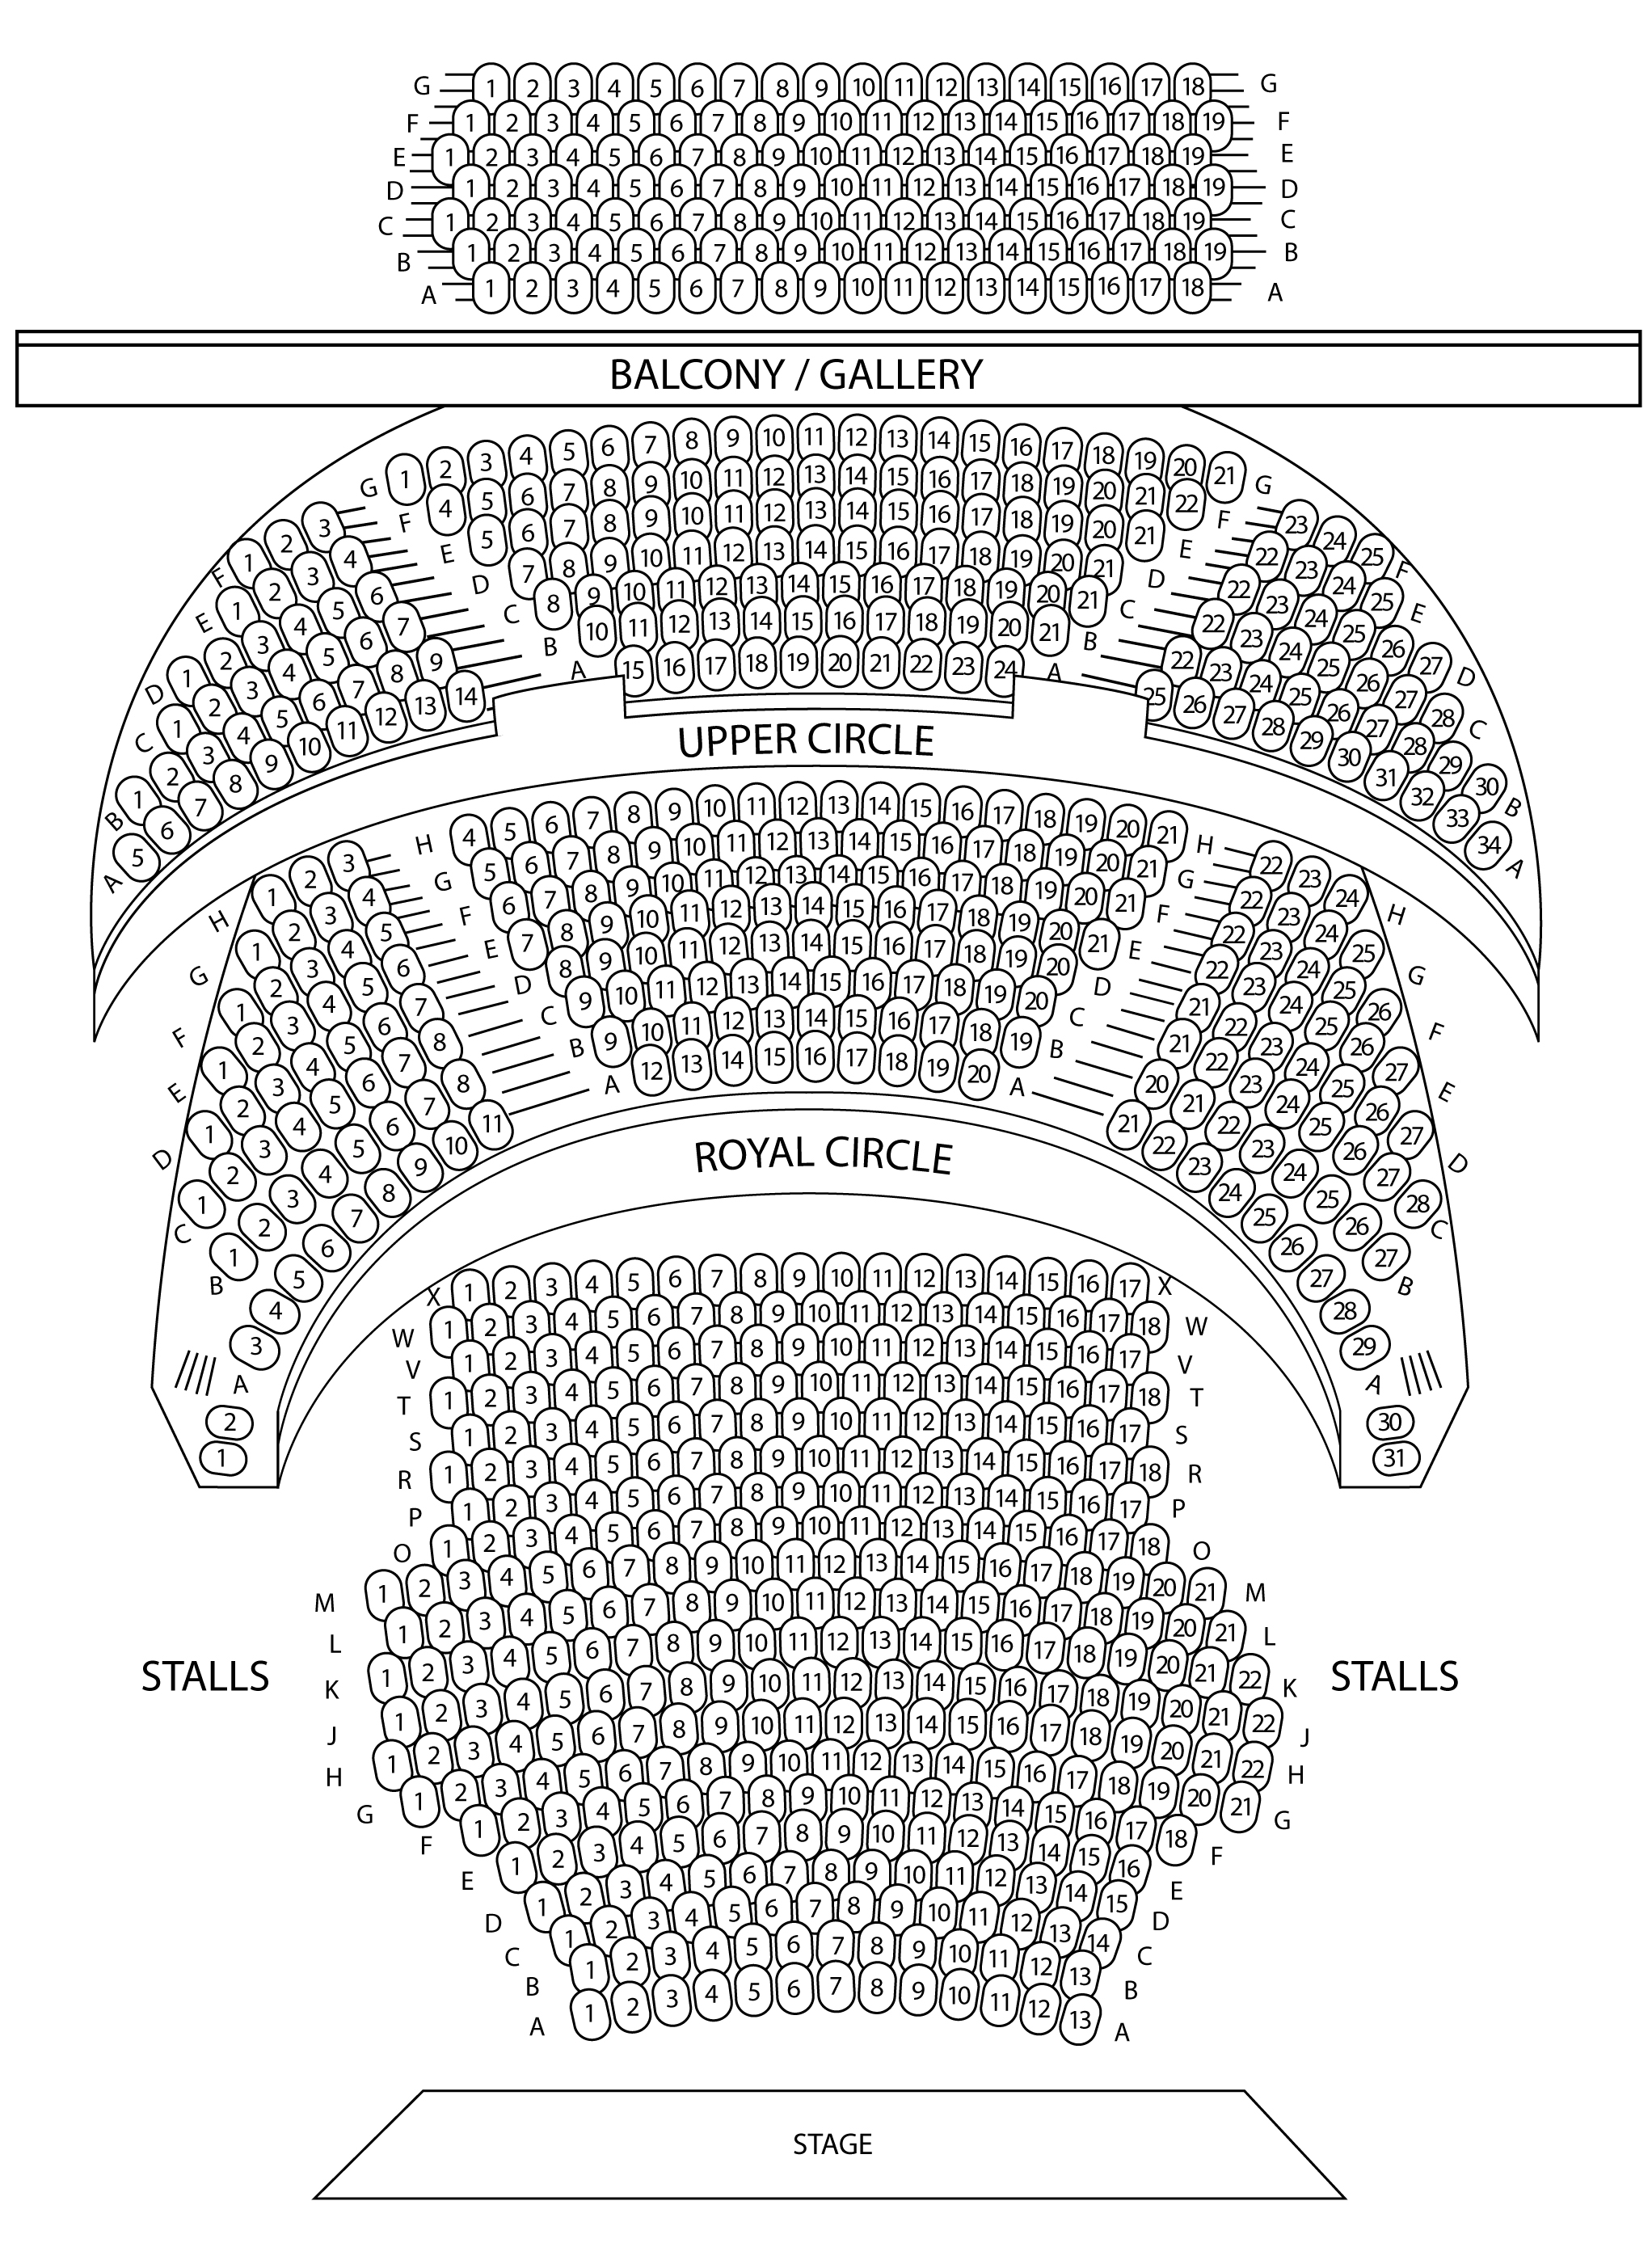 TRH Seat Map